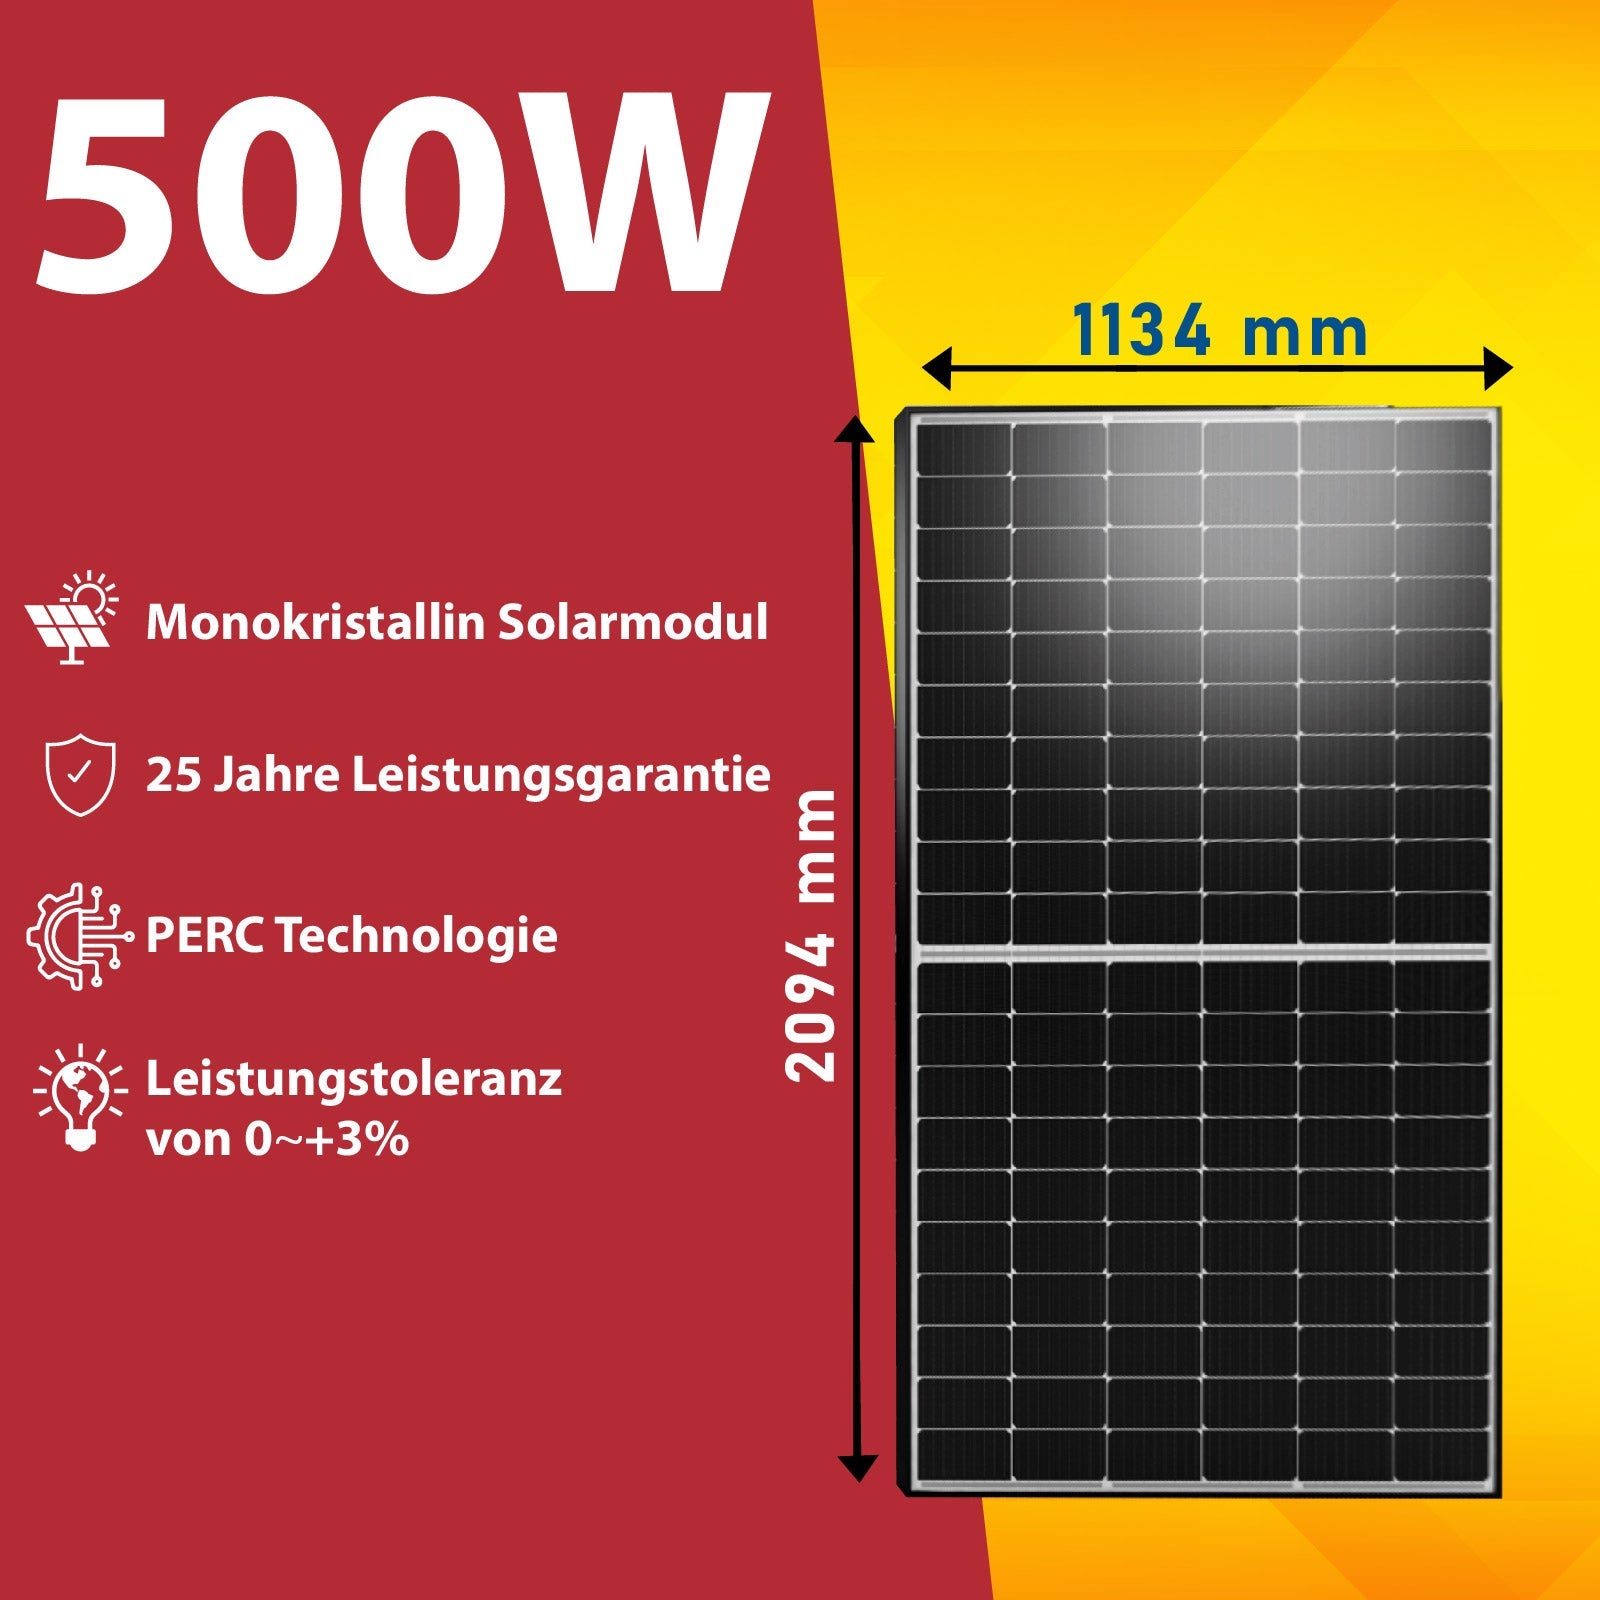 500W Solarmodul Photovoltaik Monokristallin PV Solarpanel